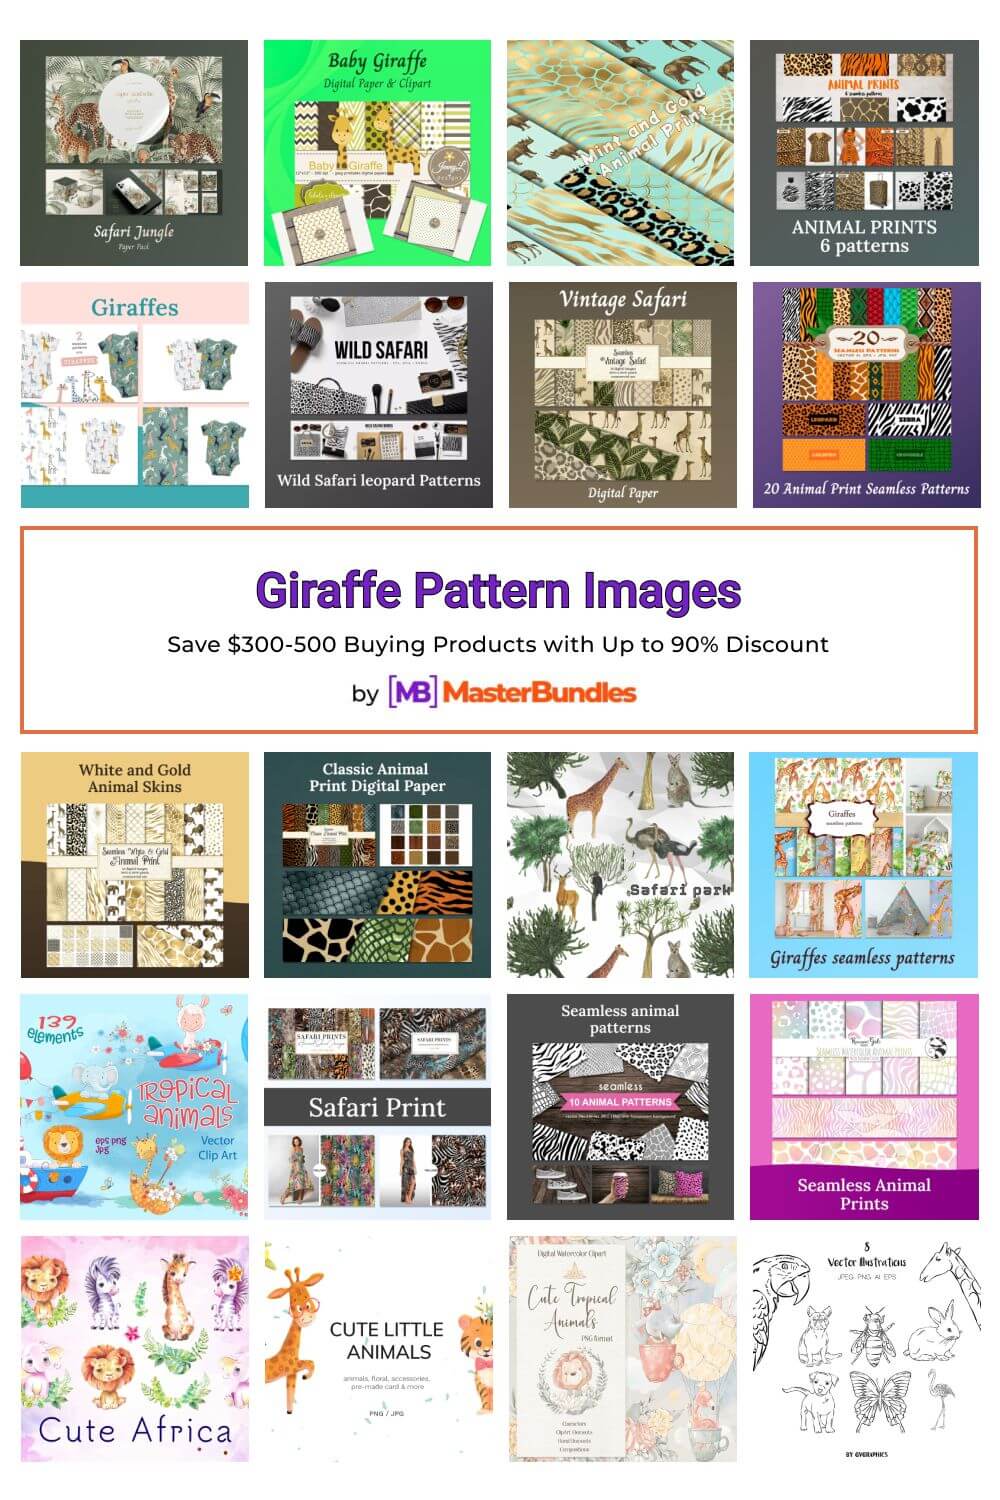 giraffe pattern images pinterest image.